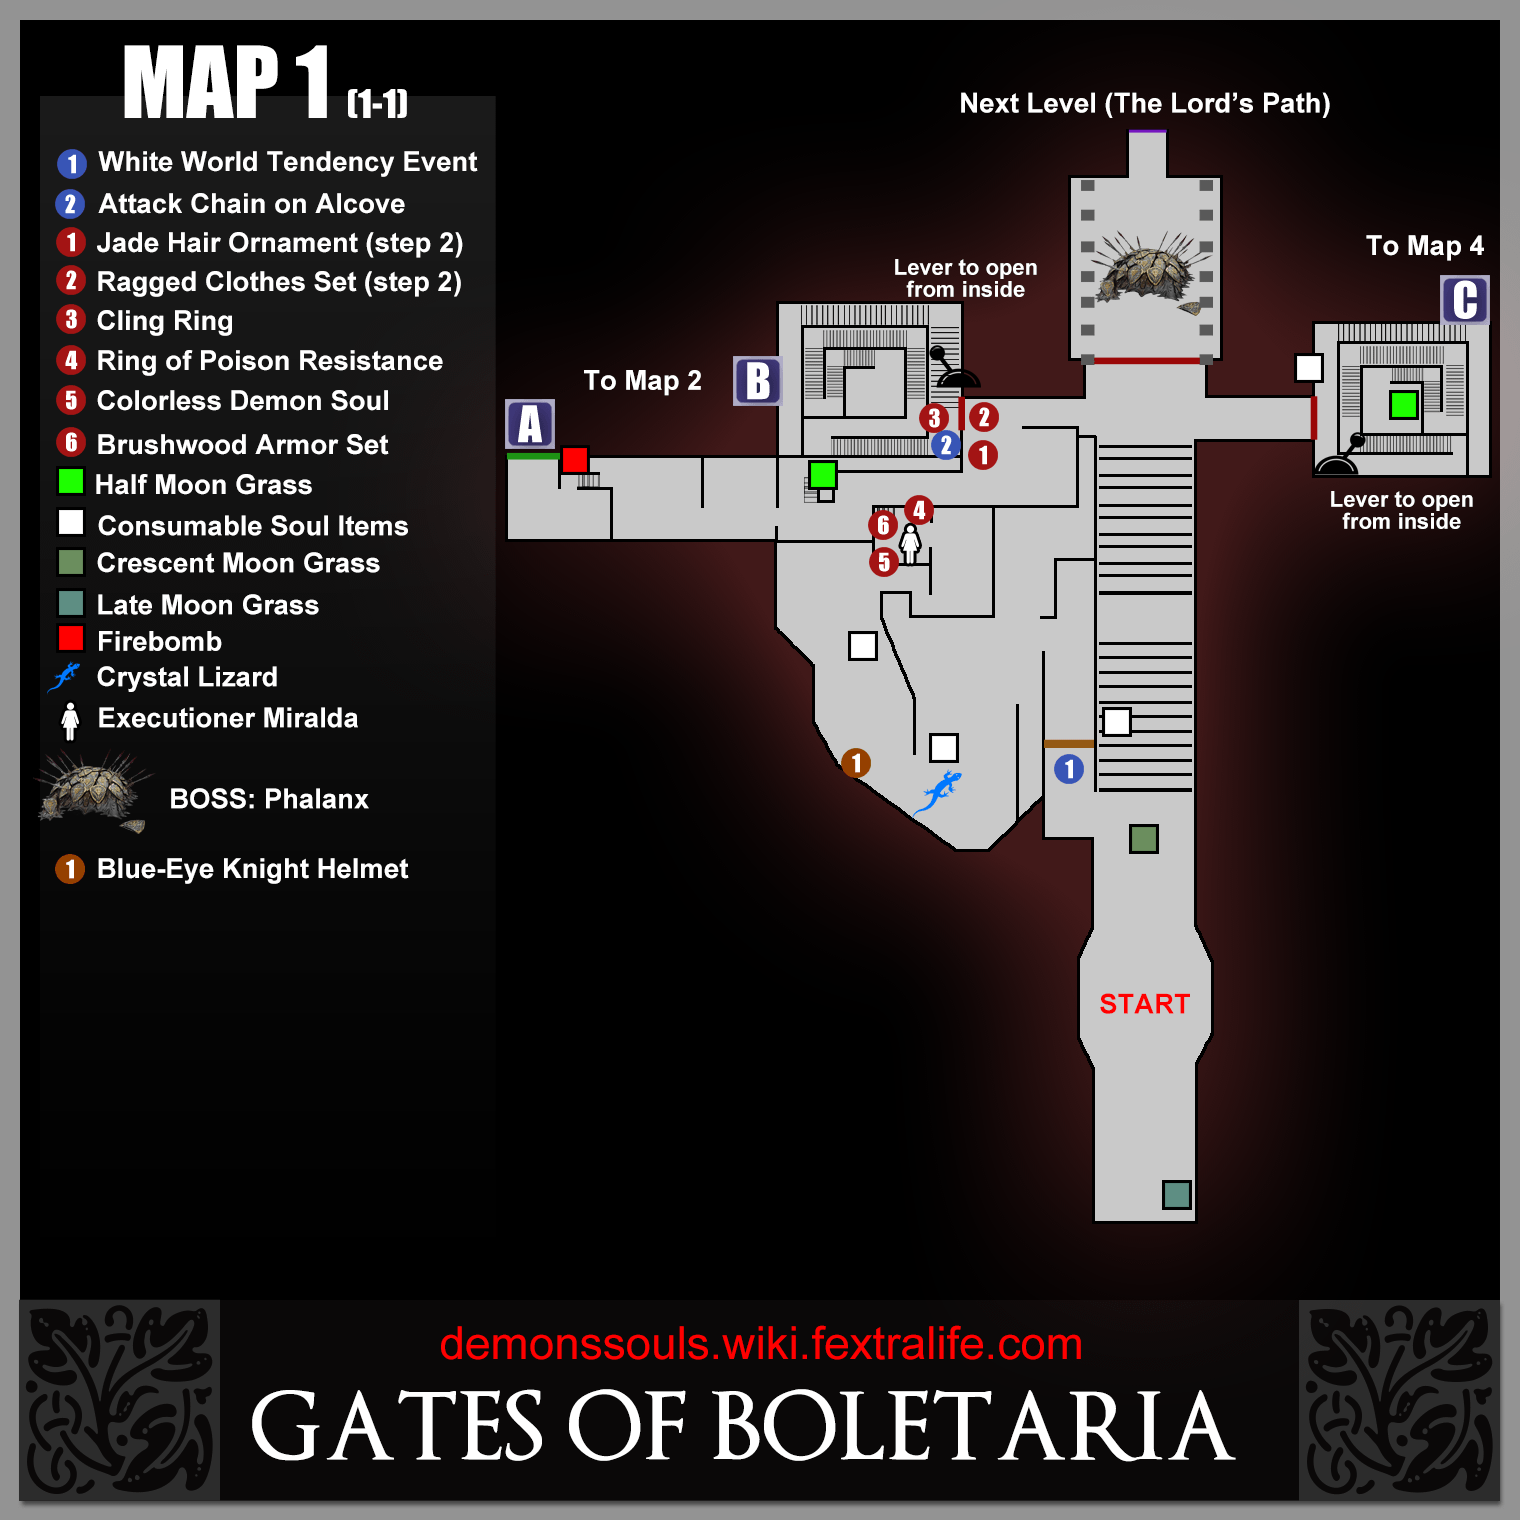 Gates of Boletaria